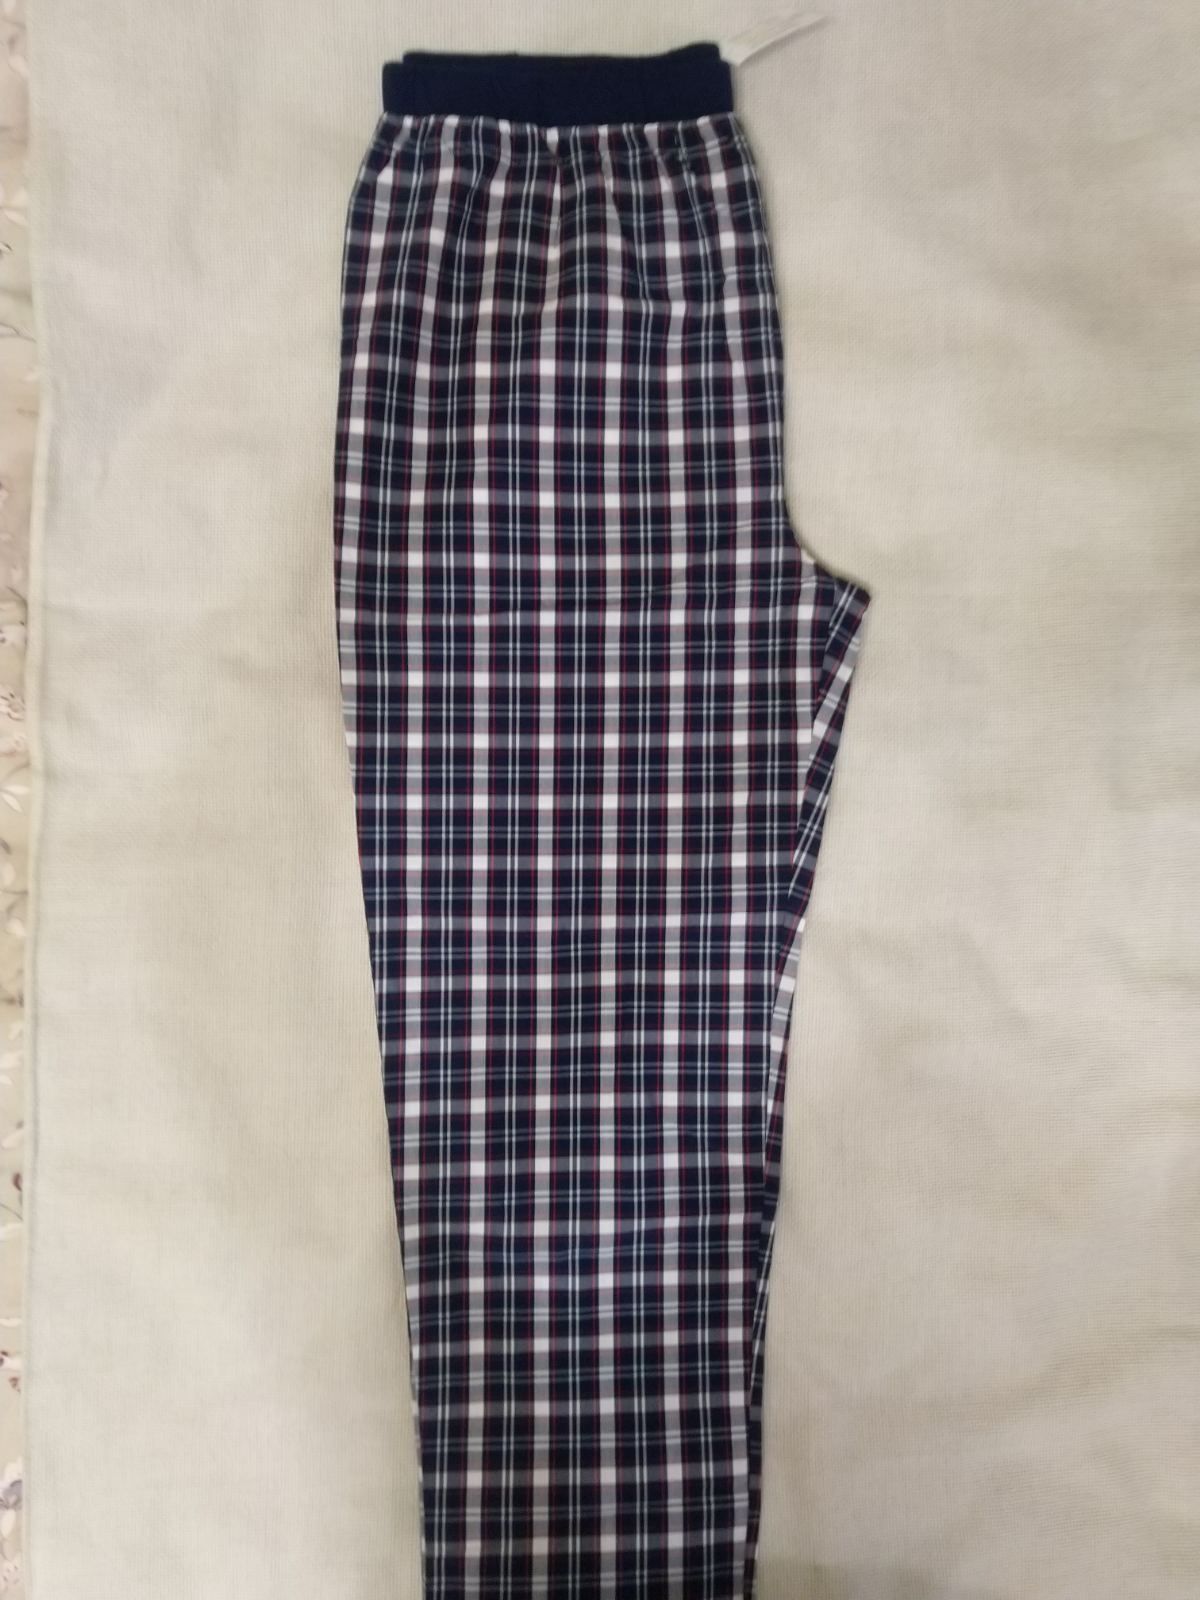 Домашние. Пижамные штаны. True style .XL. 56-58.